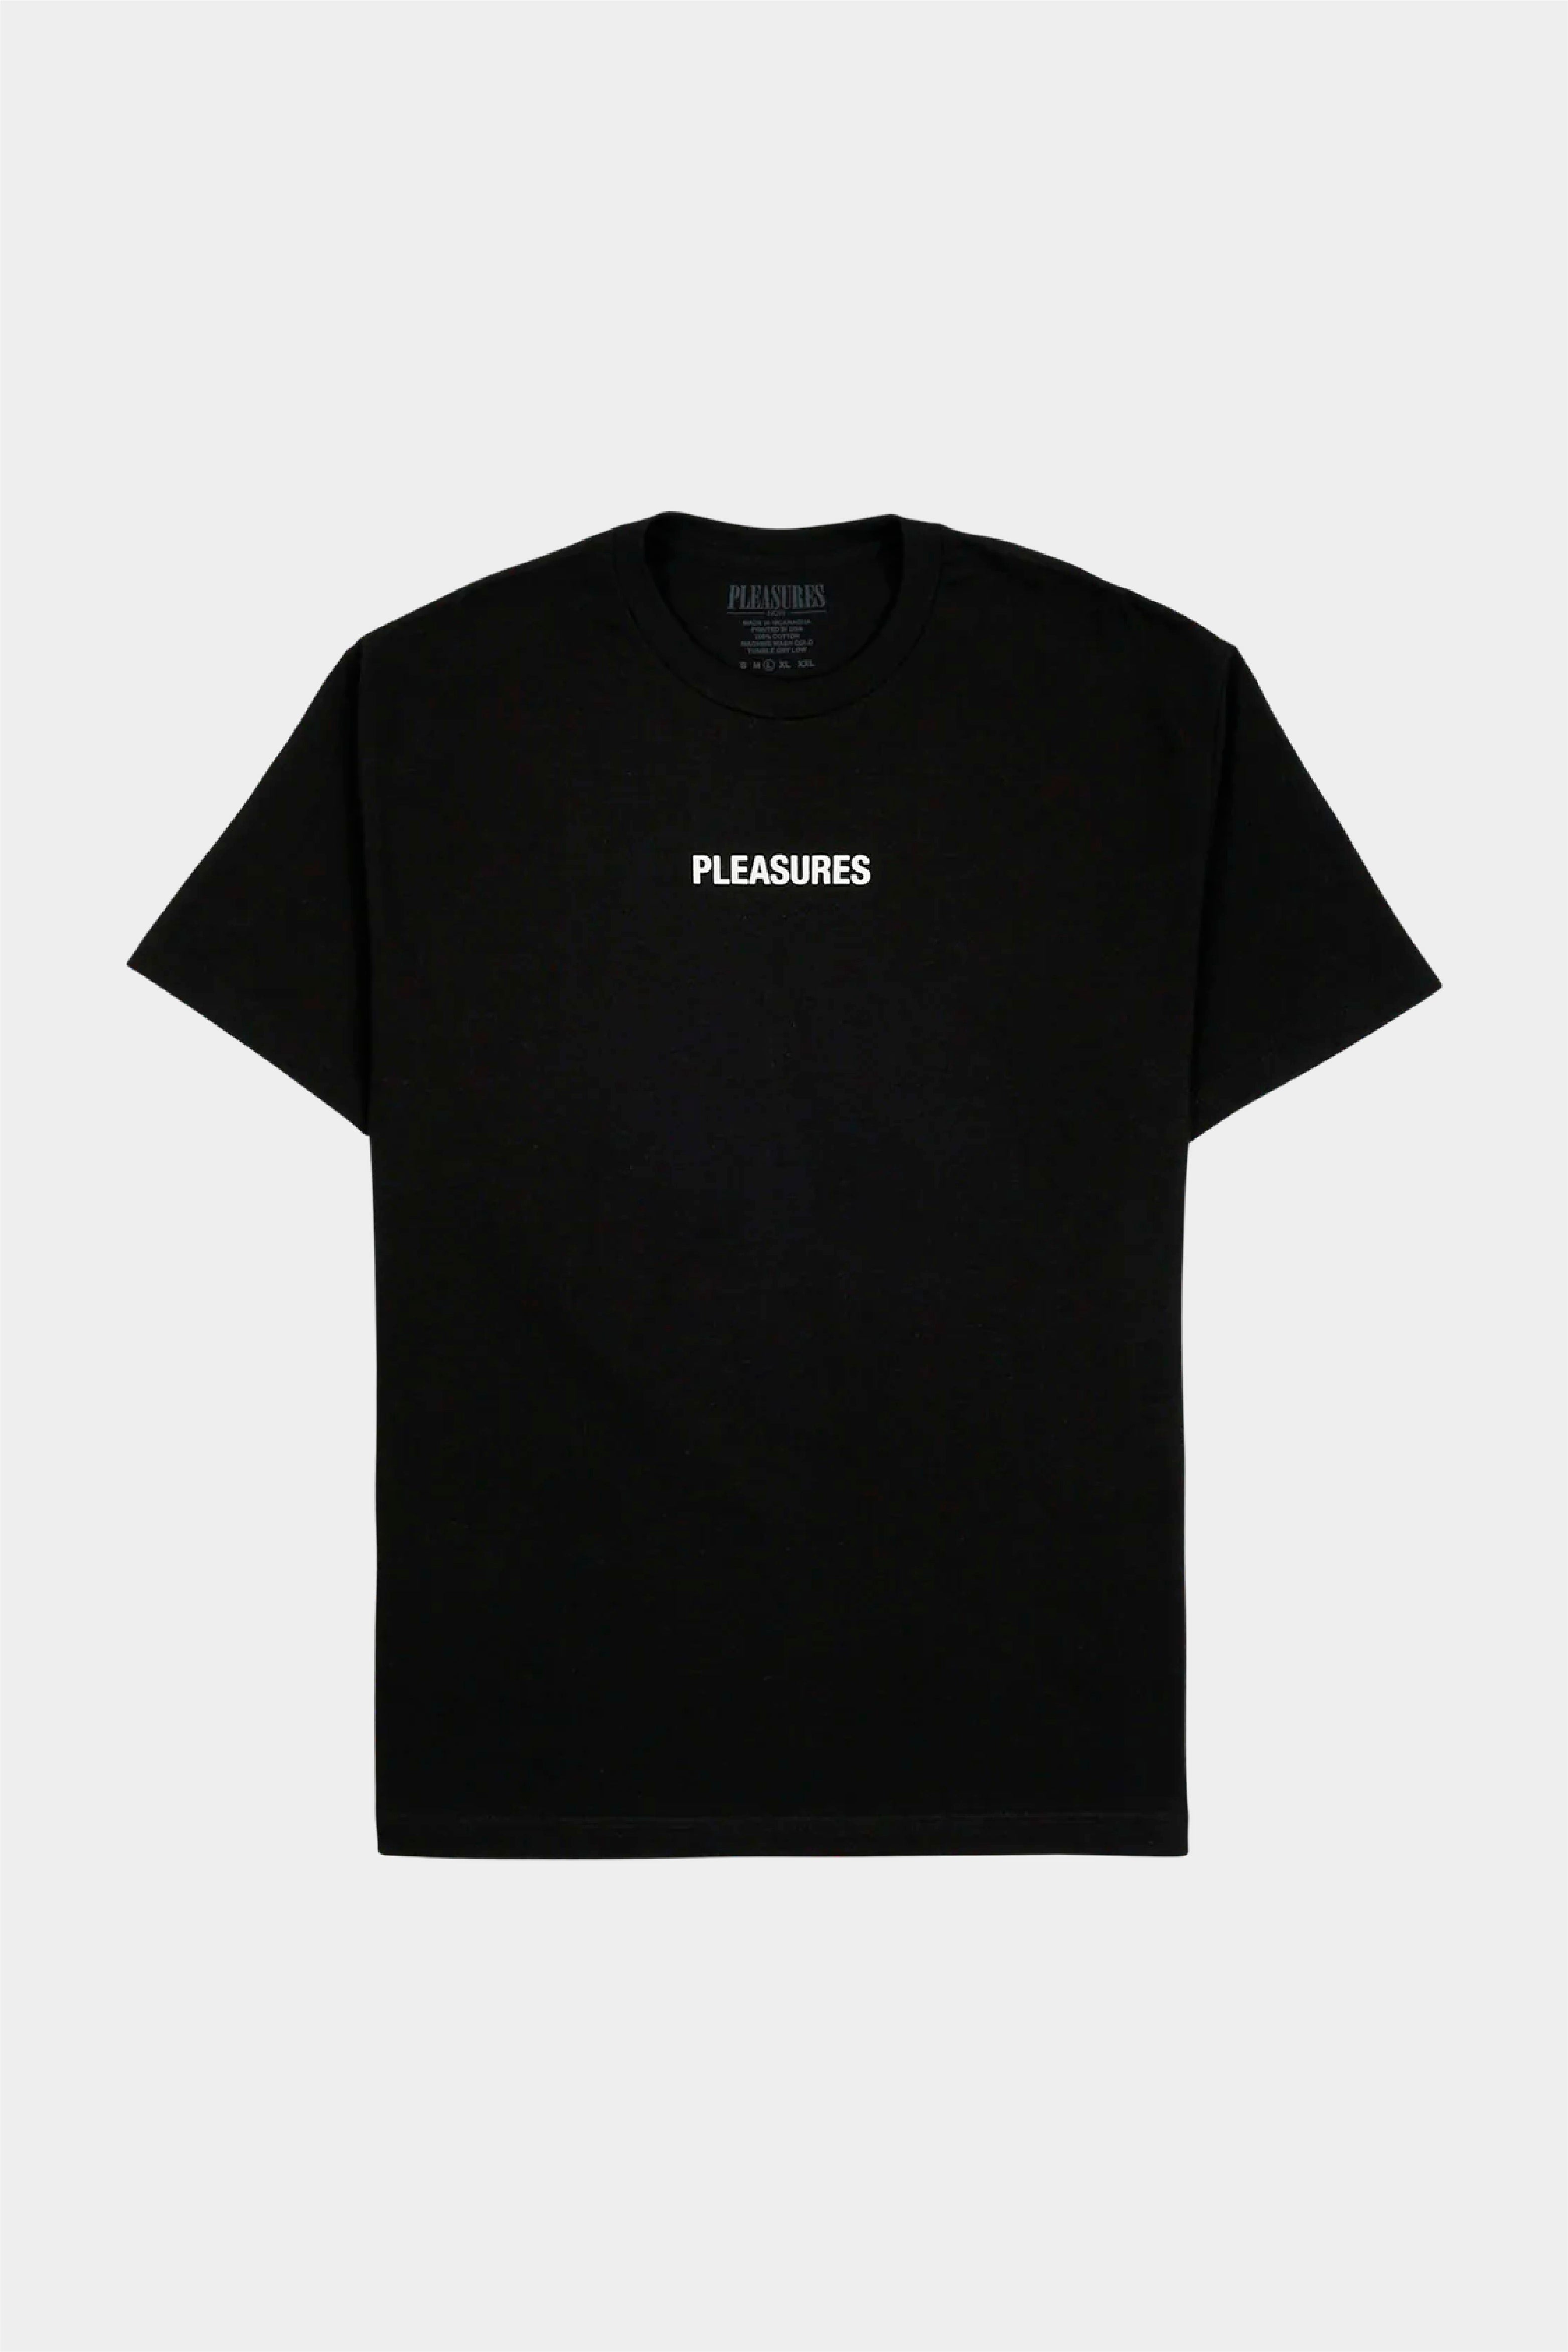 Selectshop FRAME - PLEASURES Black Flying Tee T-Shirts Concept Store Dubai